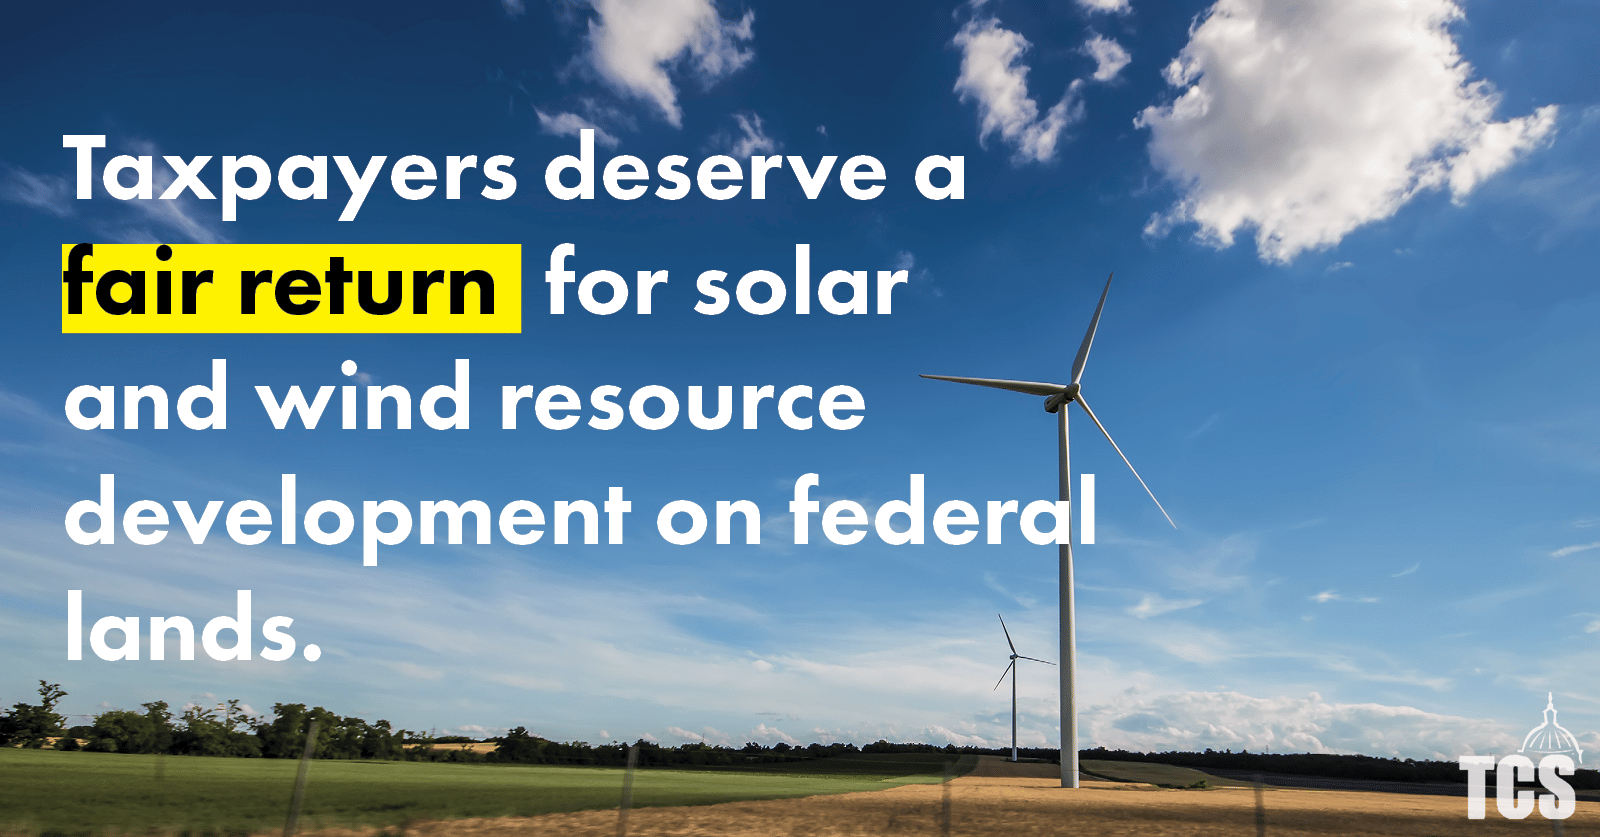 Taxpayers in Nevada deserve a fair return for renewable energy development on public lands